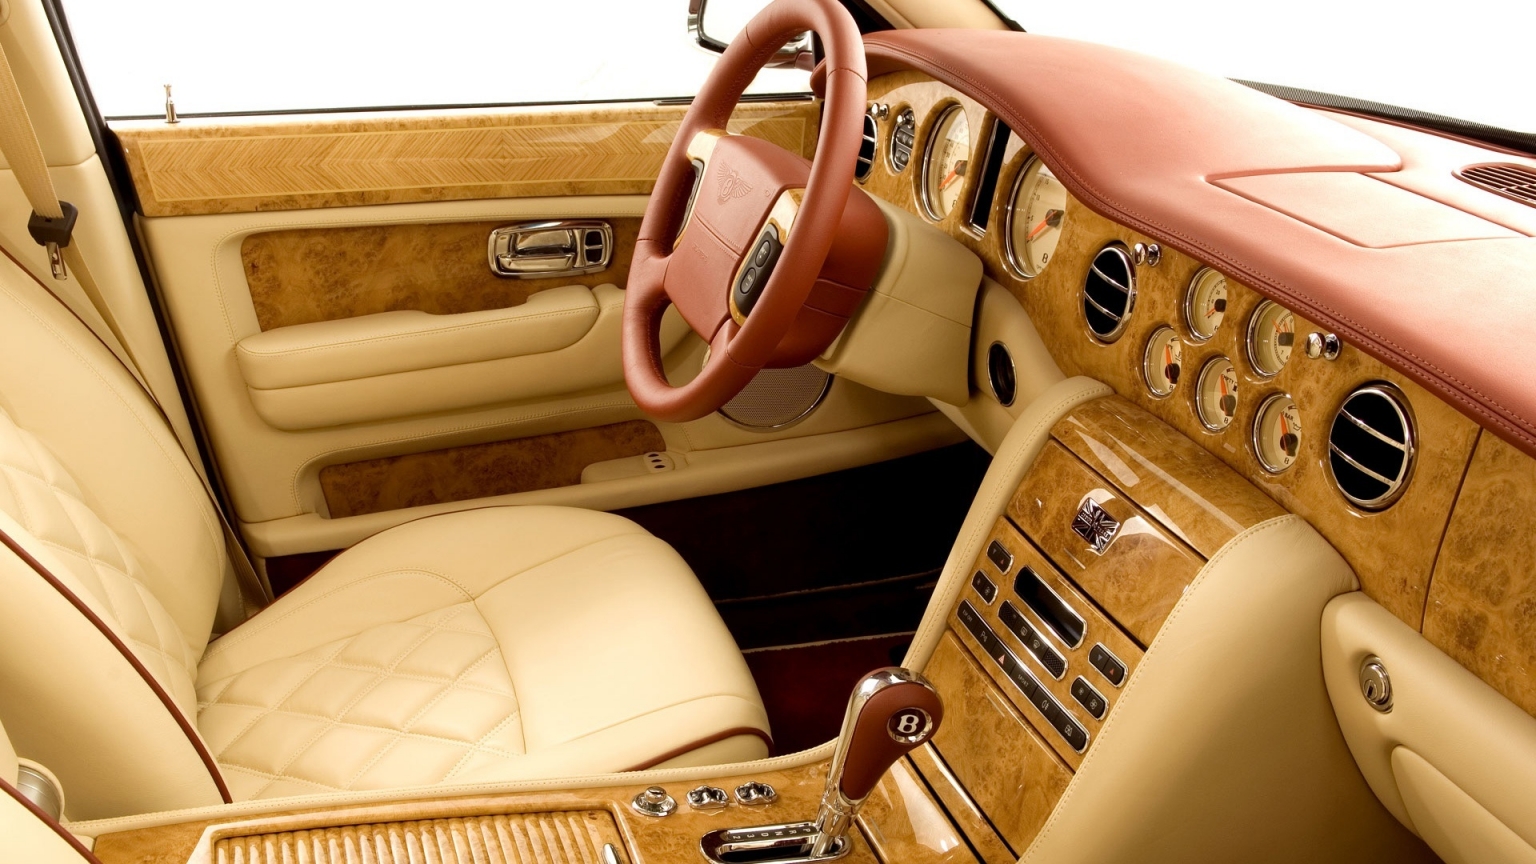 Luxury Bentley Interior for 1536 x 864 HDTV resolution